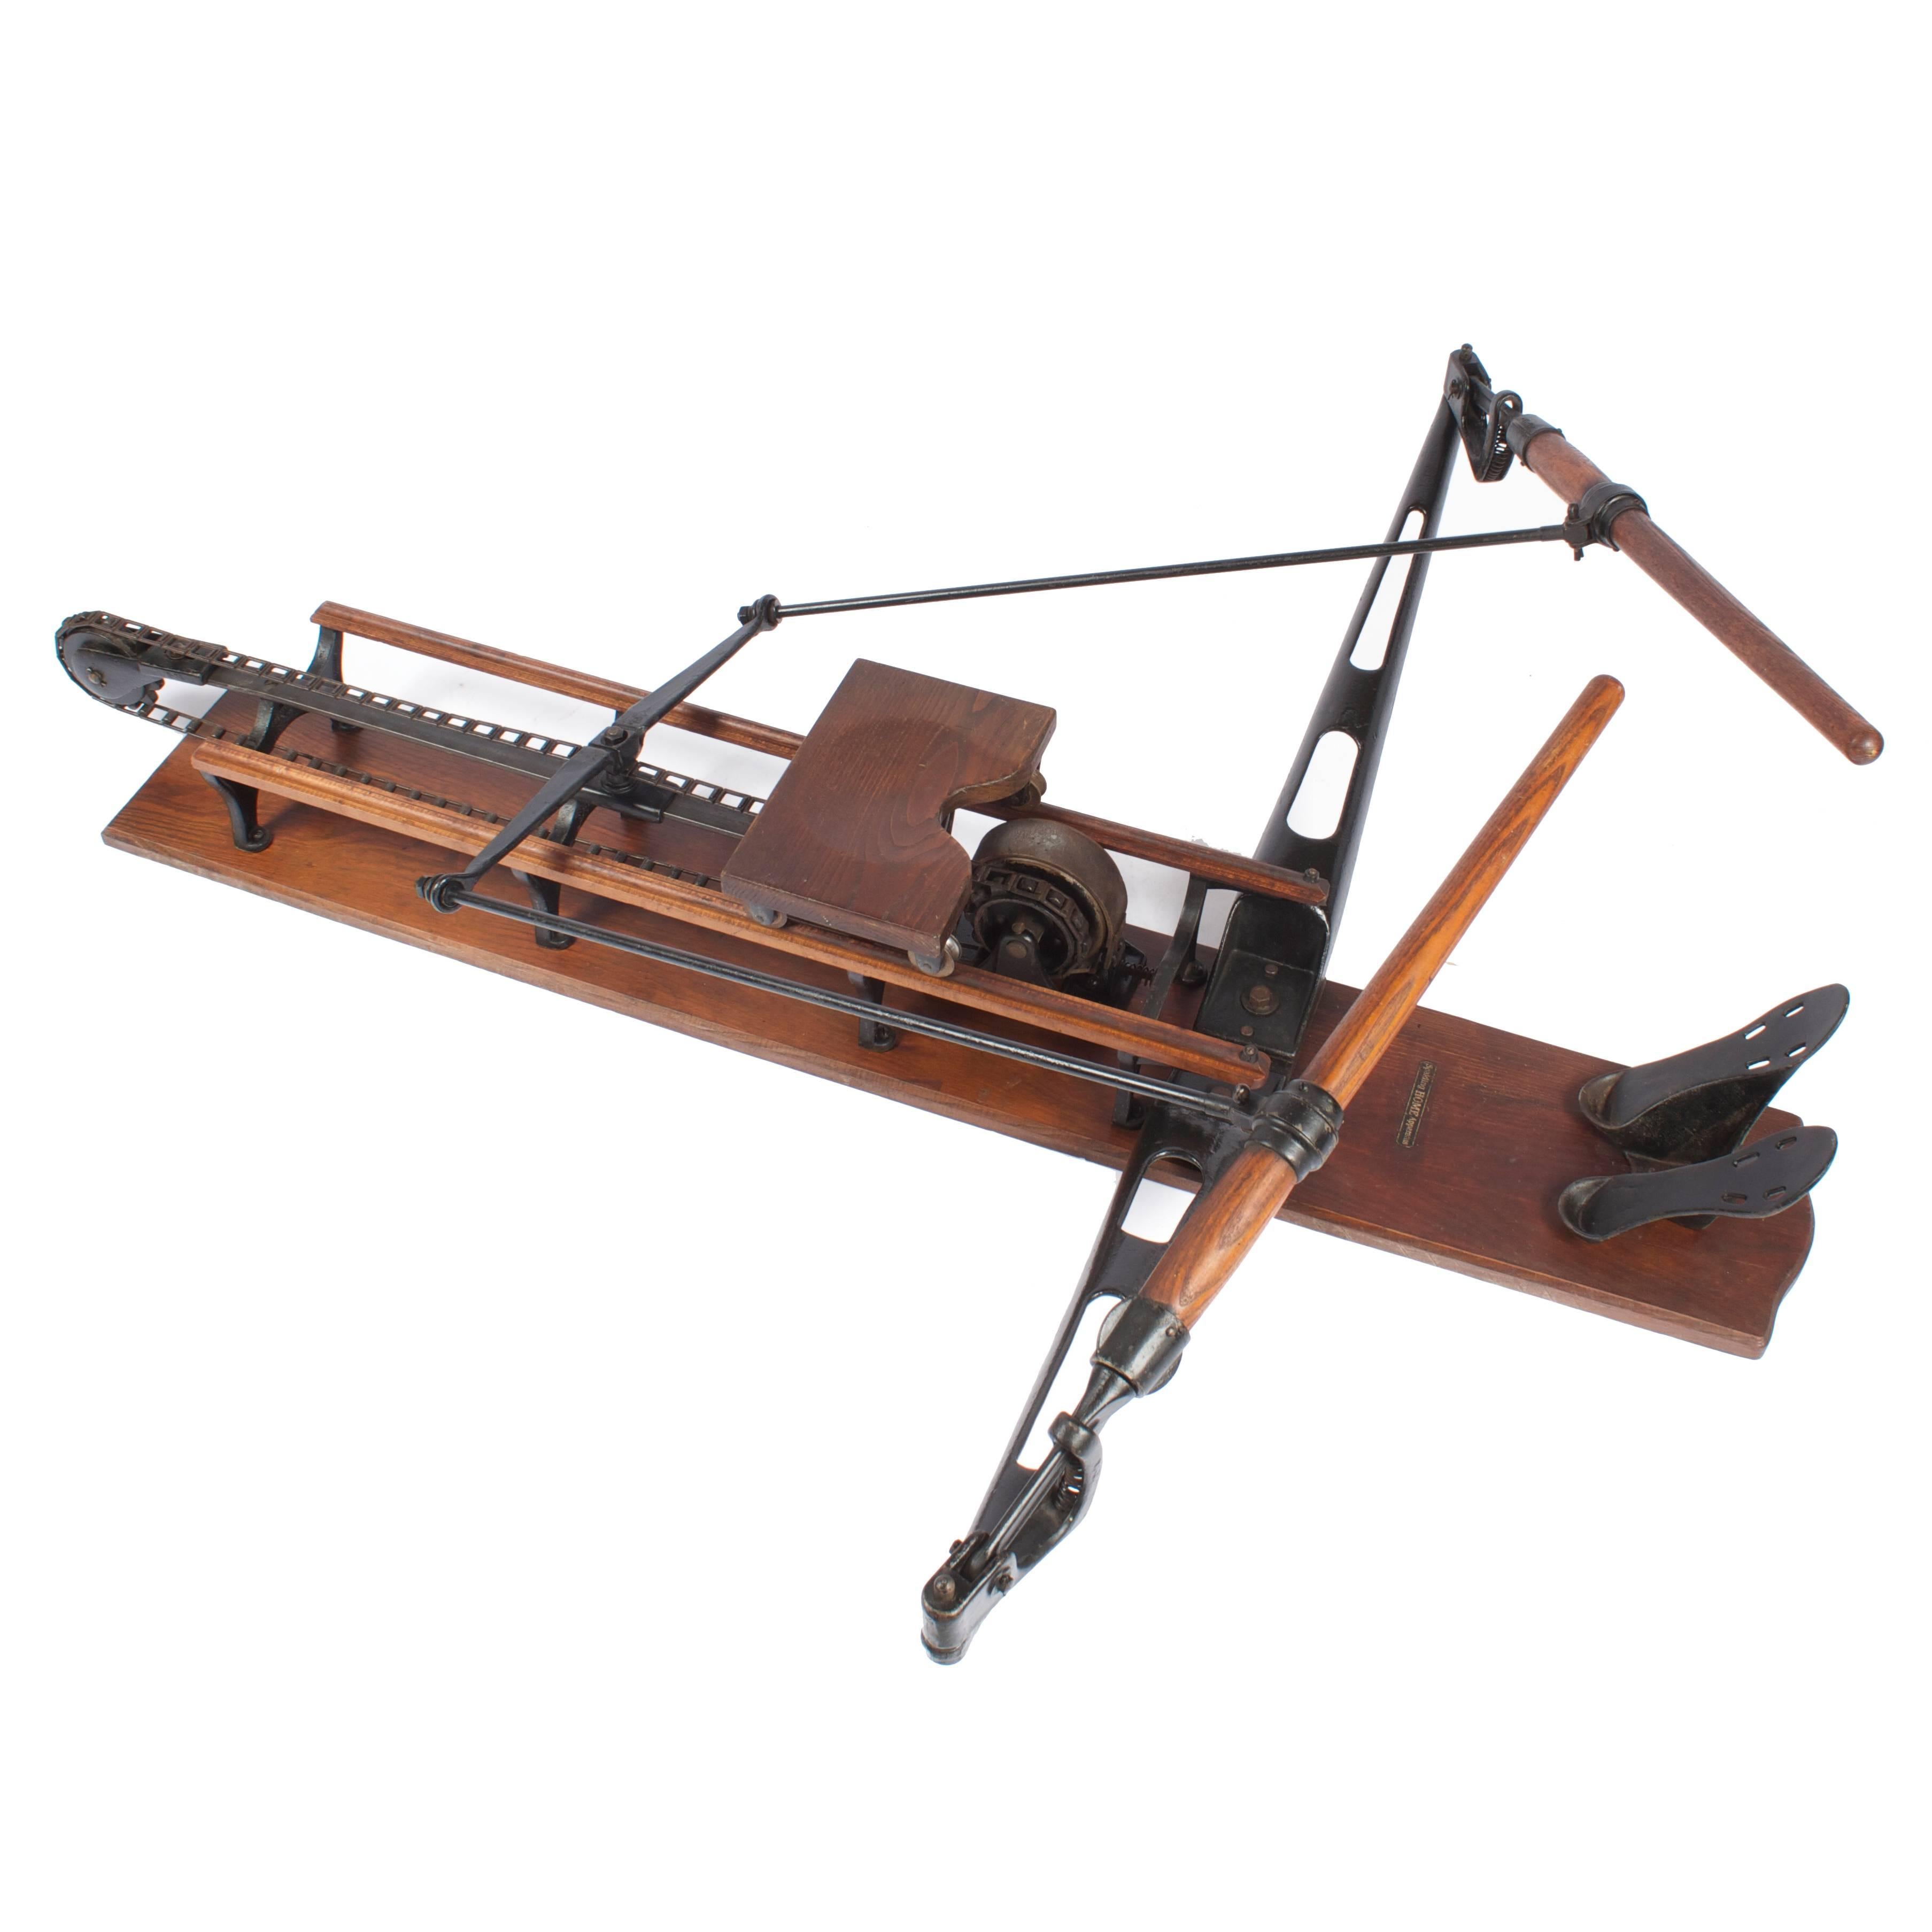 1920 Spalding Rowing Machine, Sporting Equipment